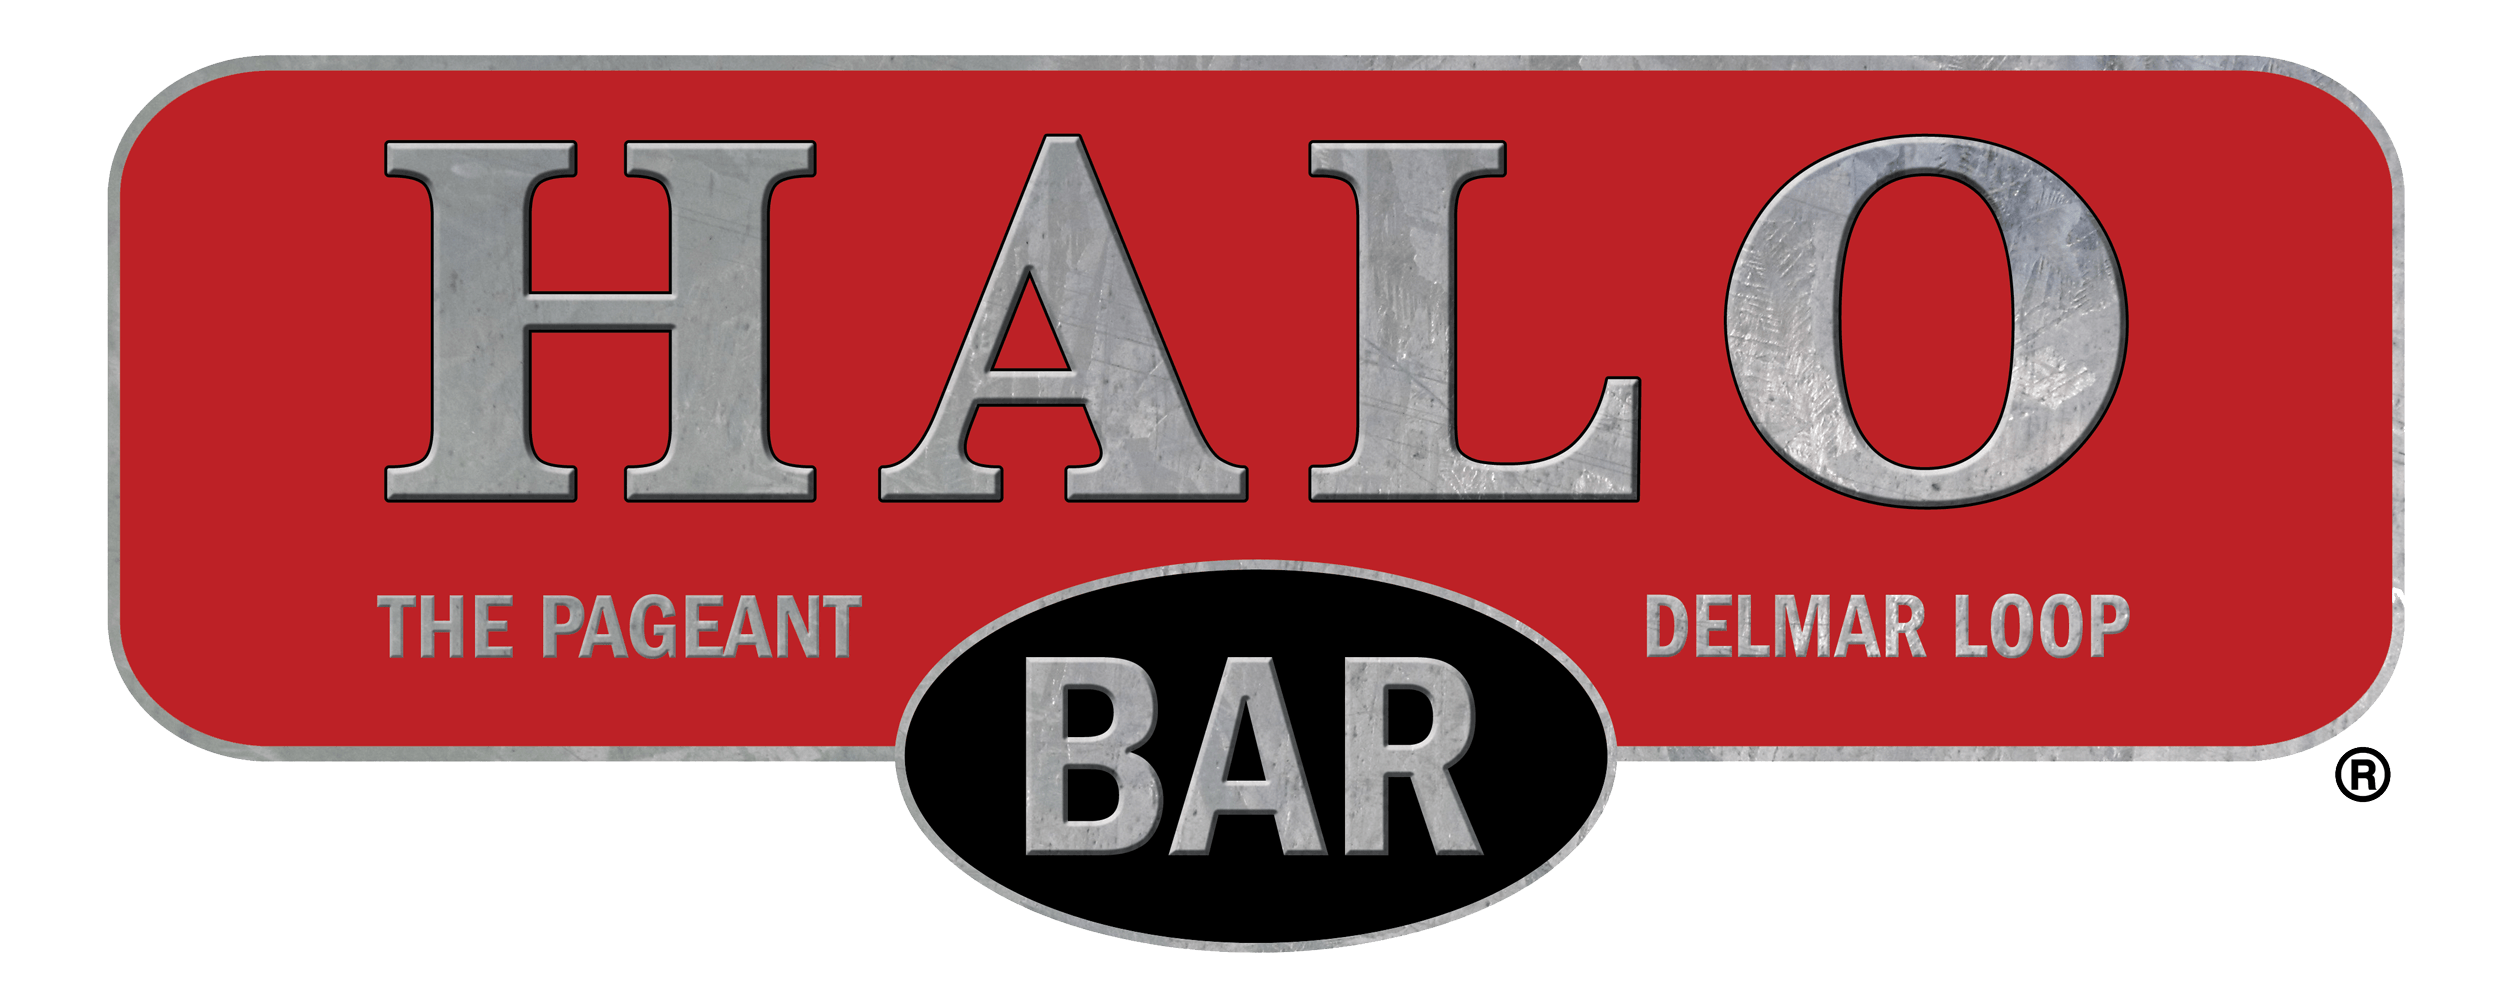 Saint-Louis Logo - Halo Bar at The Pageant - Saint Louis, Missouri - Early Access